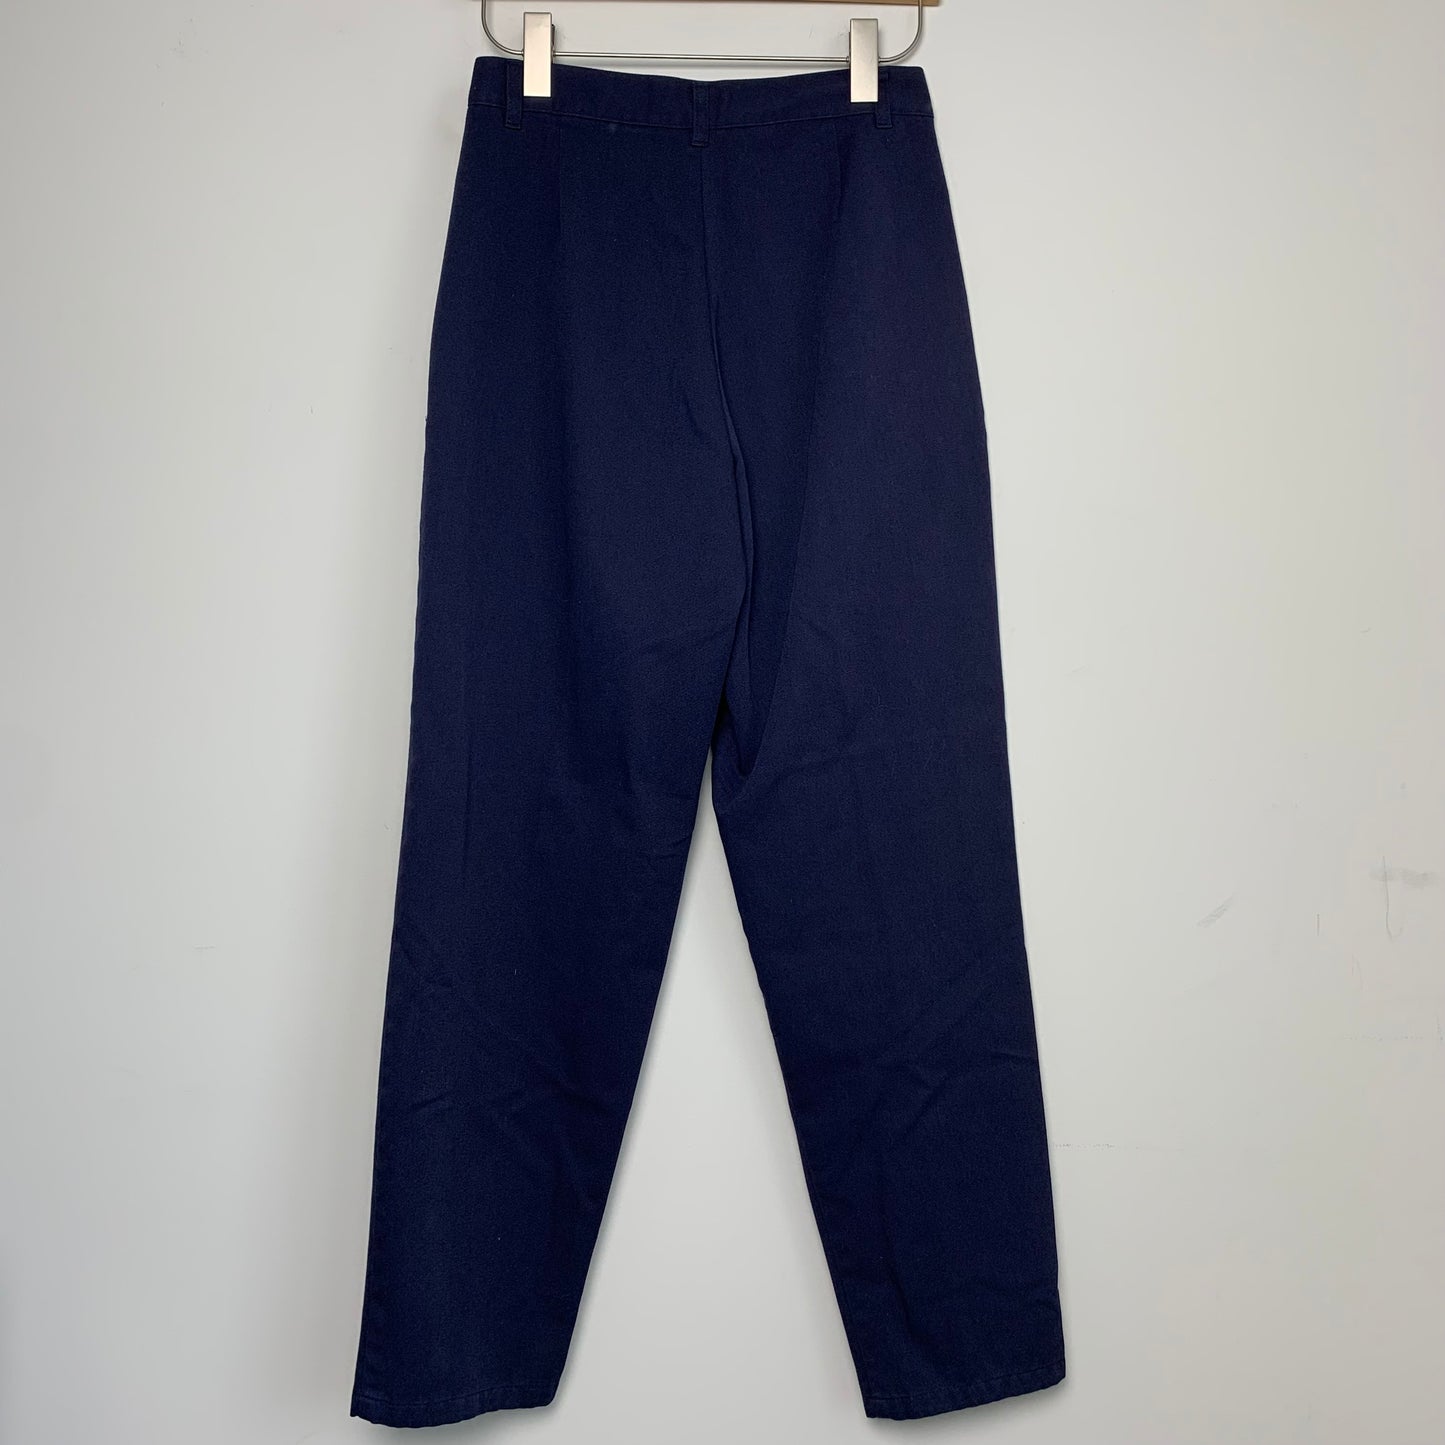 90s Bugle Boy Navy Blue High Rise Trouser Pants Pleated Straight Leg 26 inch waist